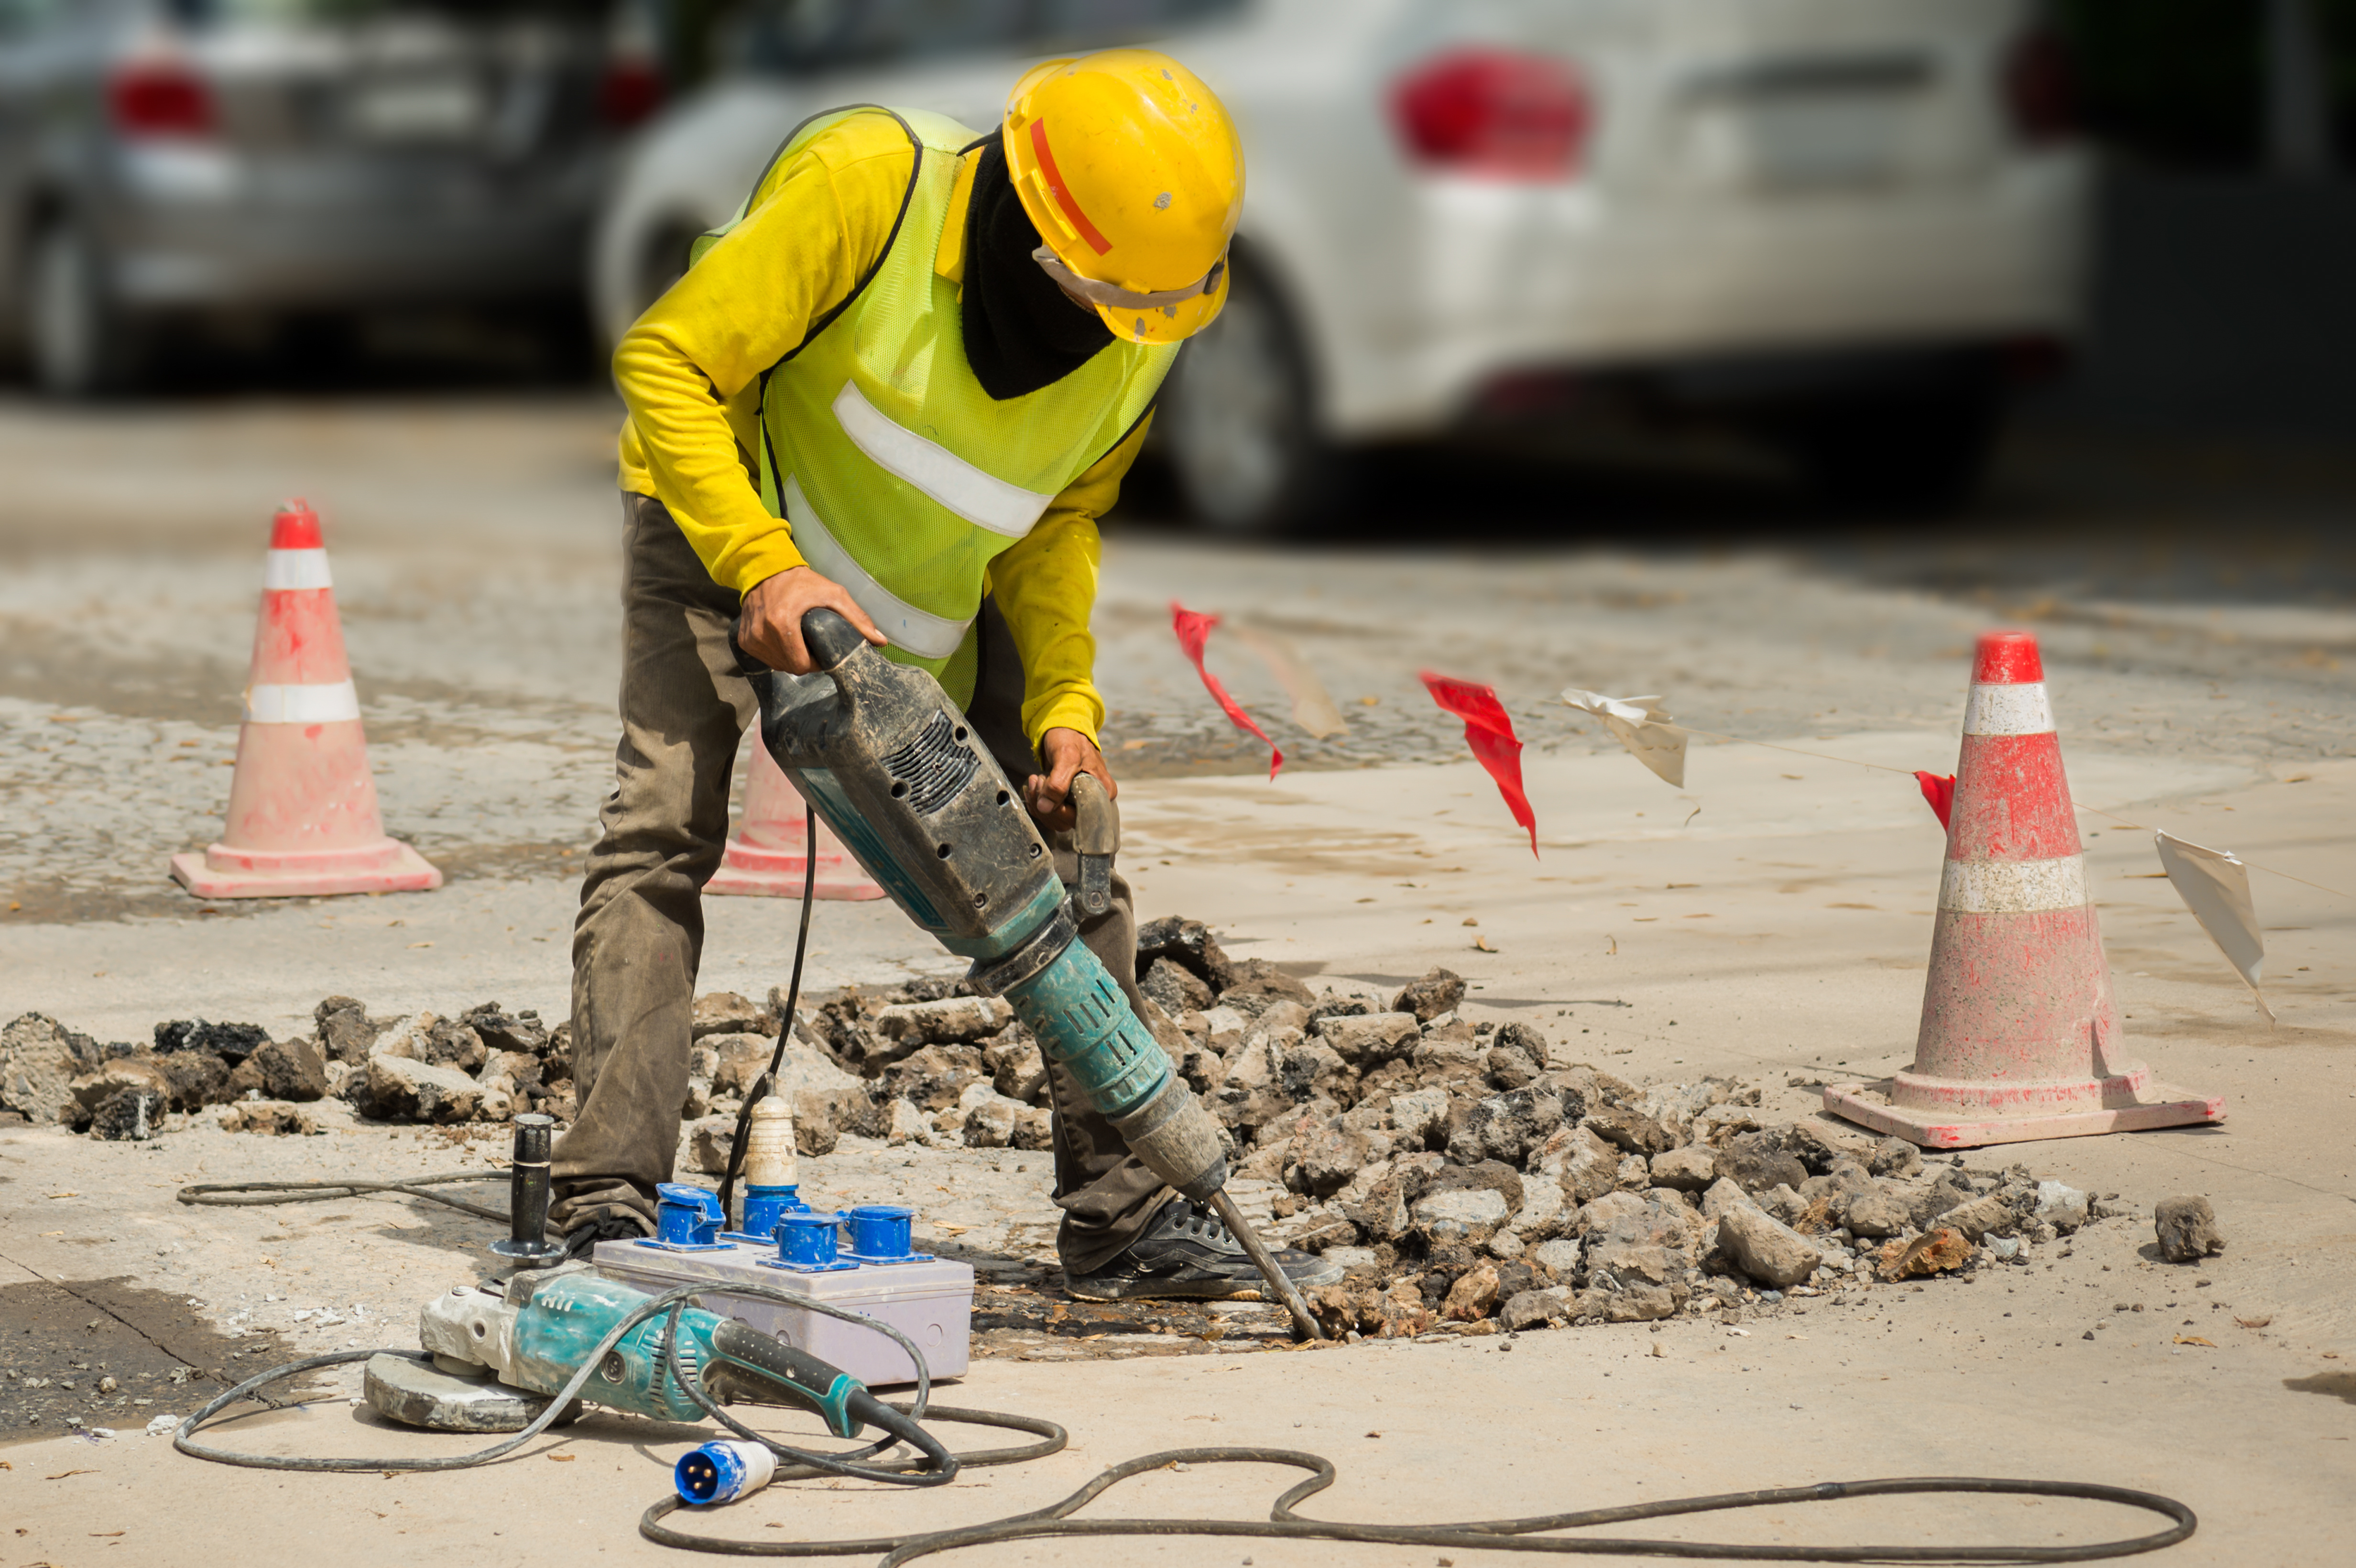 Worker Drilling Concrete Driveway With Jackhammerman Repairing Road 